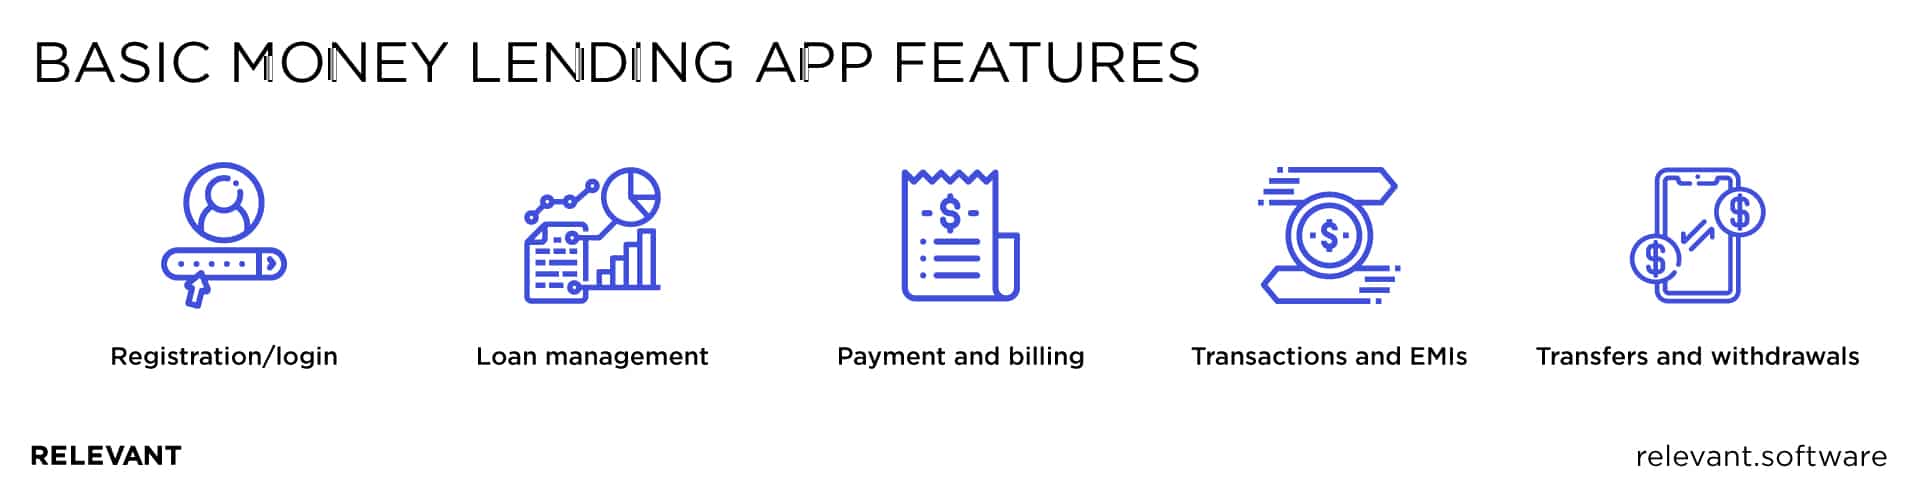 Basic money lending app features